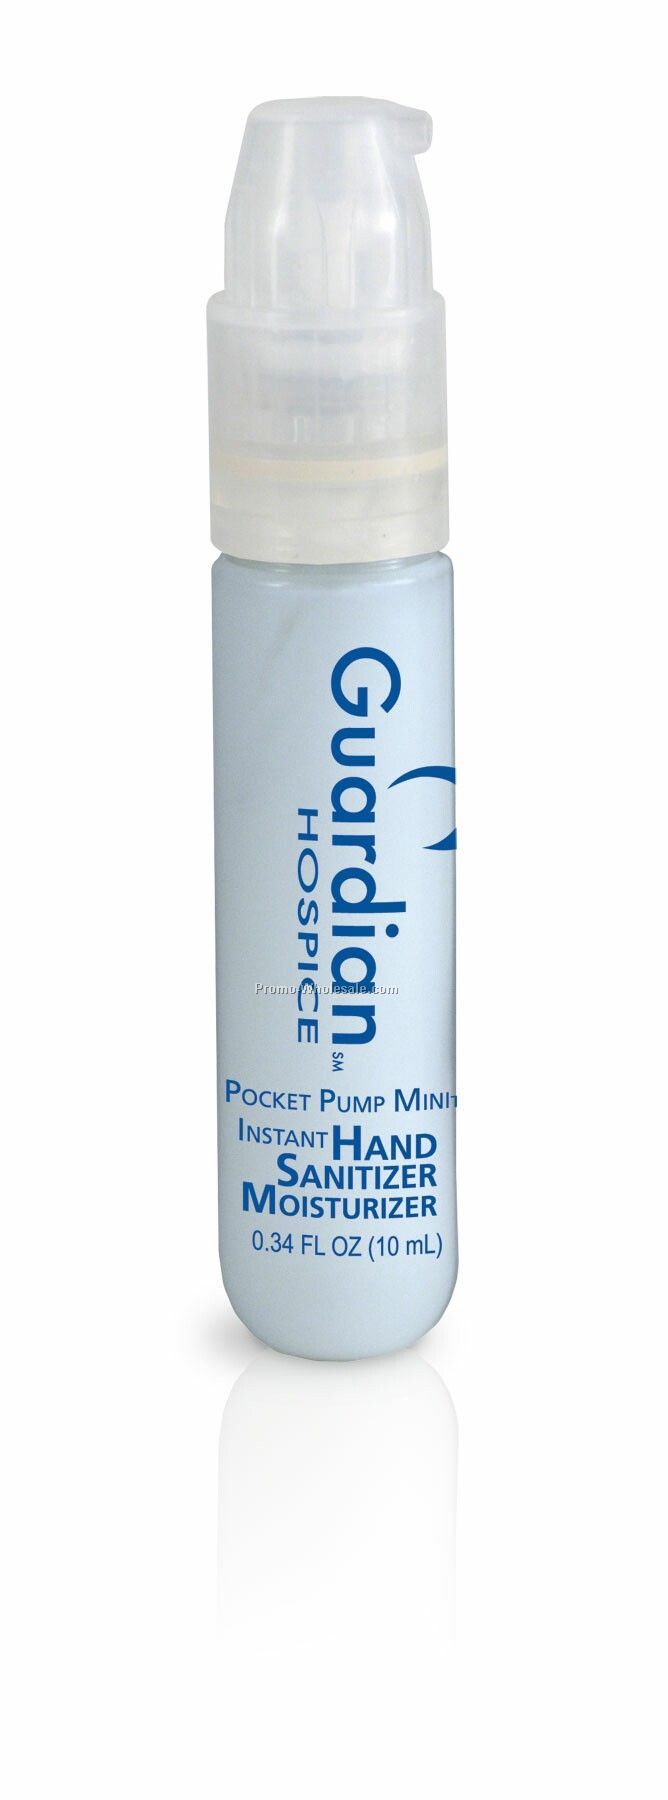 Pocket Pump Mini Instant Hand Sanitizer Moisturizer